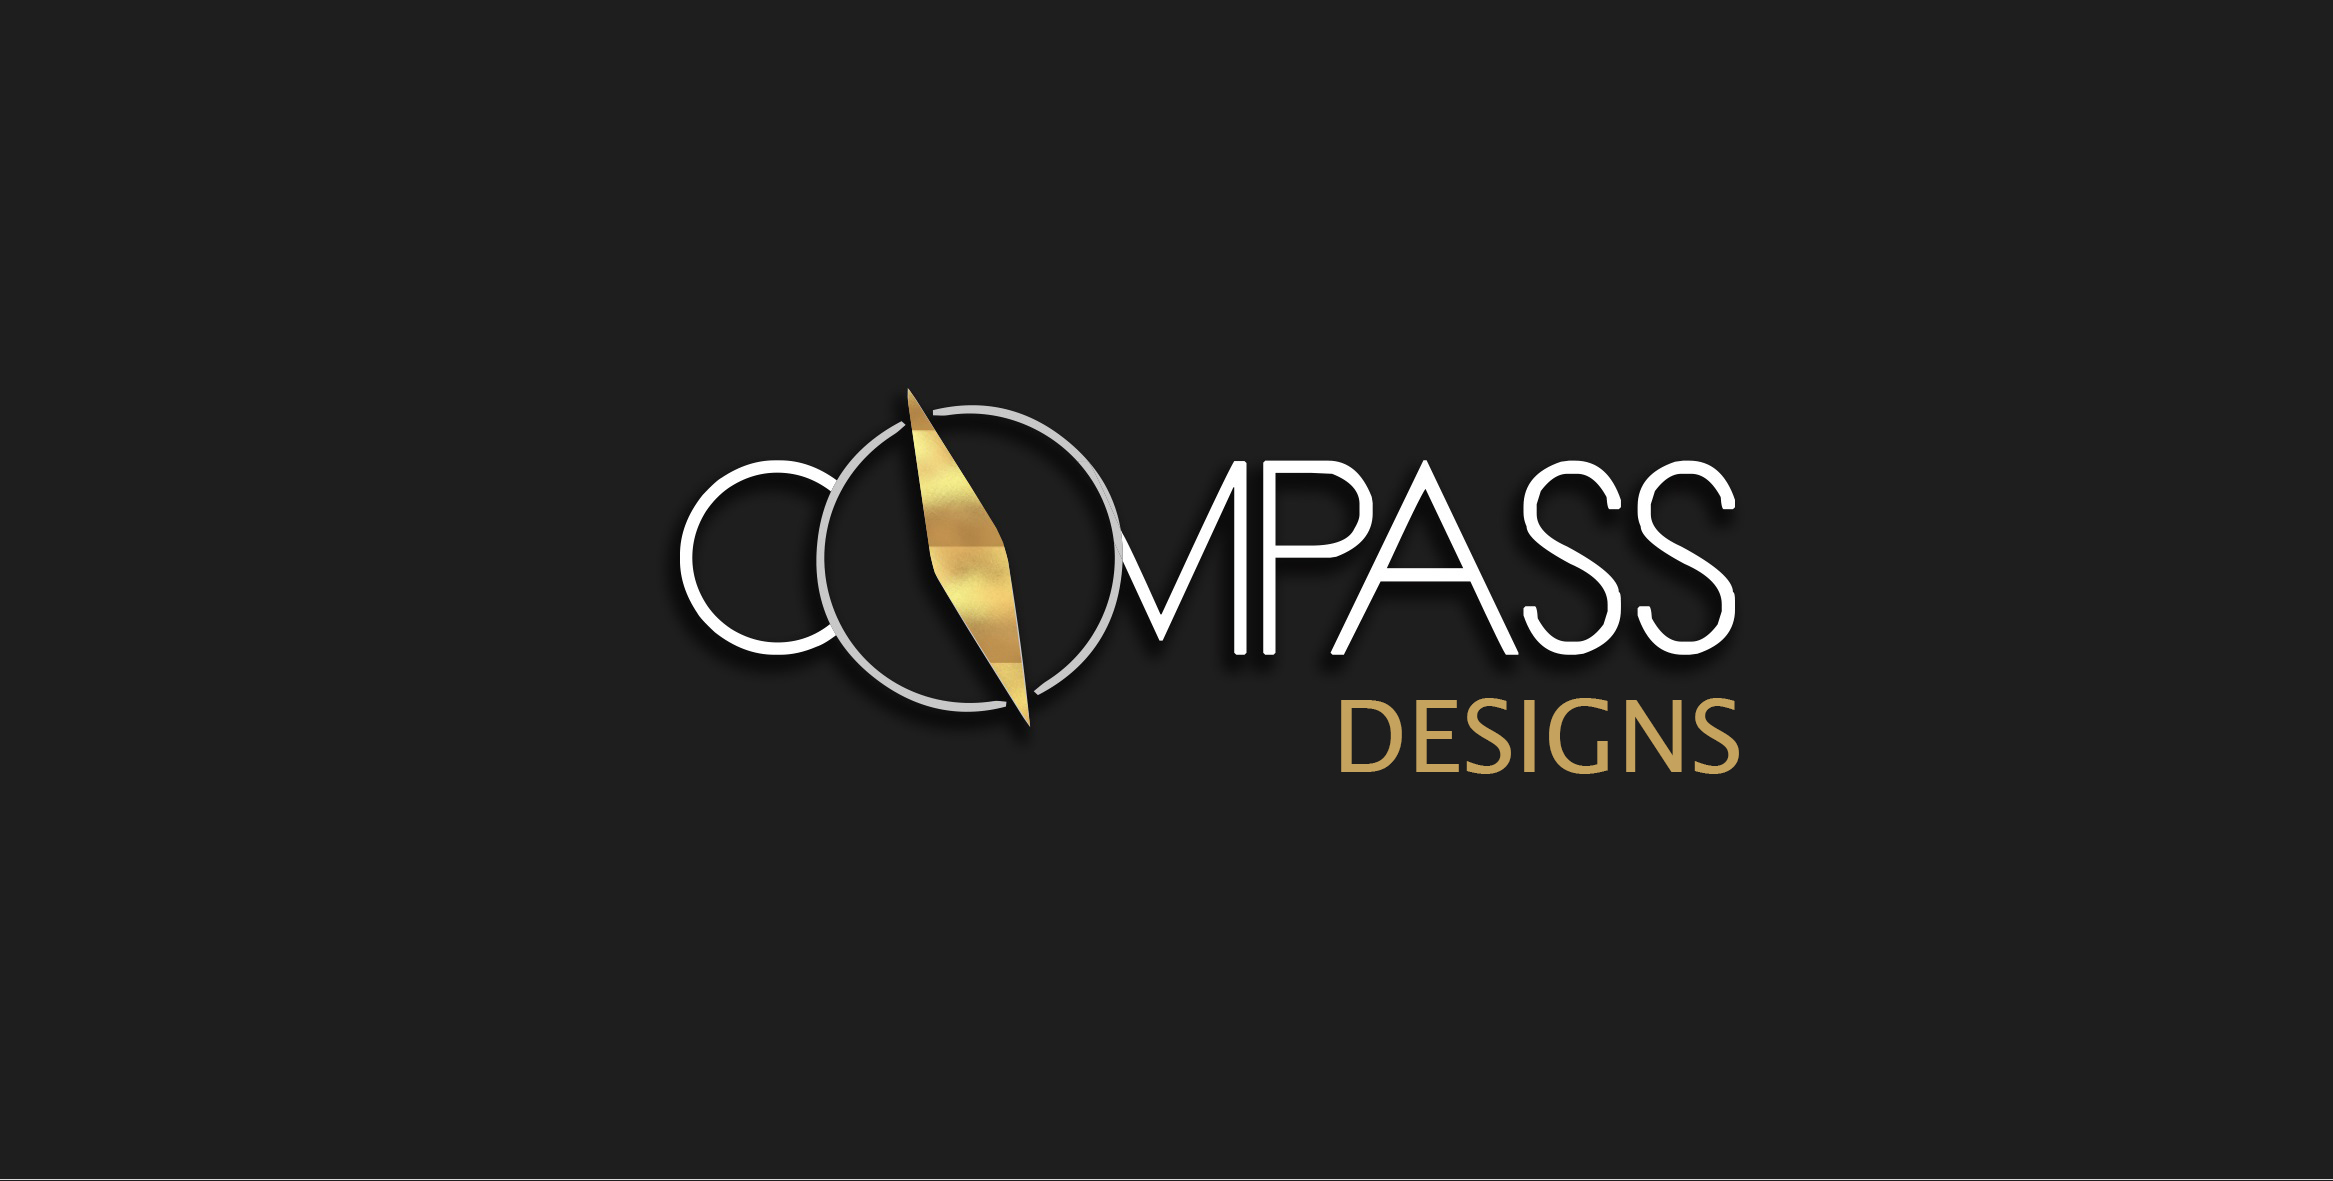 COMPASS DESIGNS